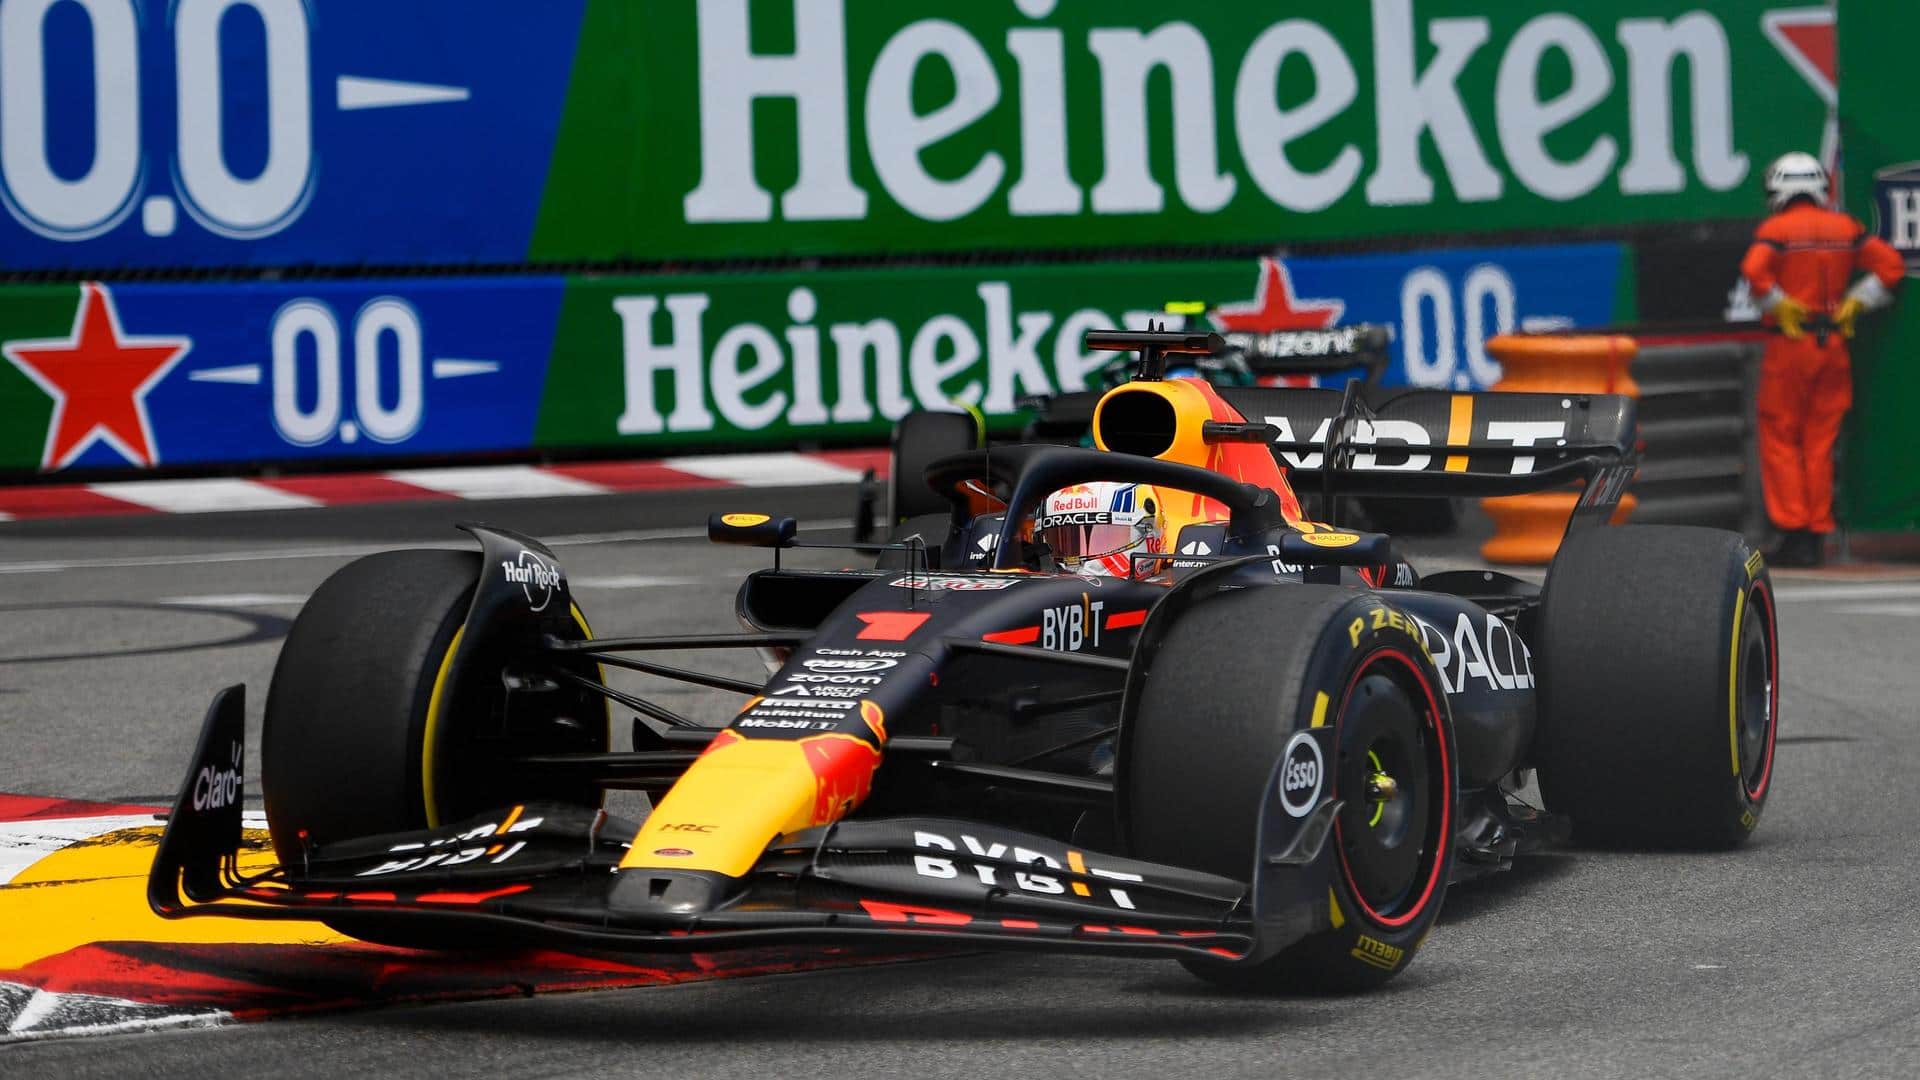 F1 2023, Max Verstappen wins the Monaco GP: Key stats